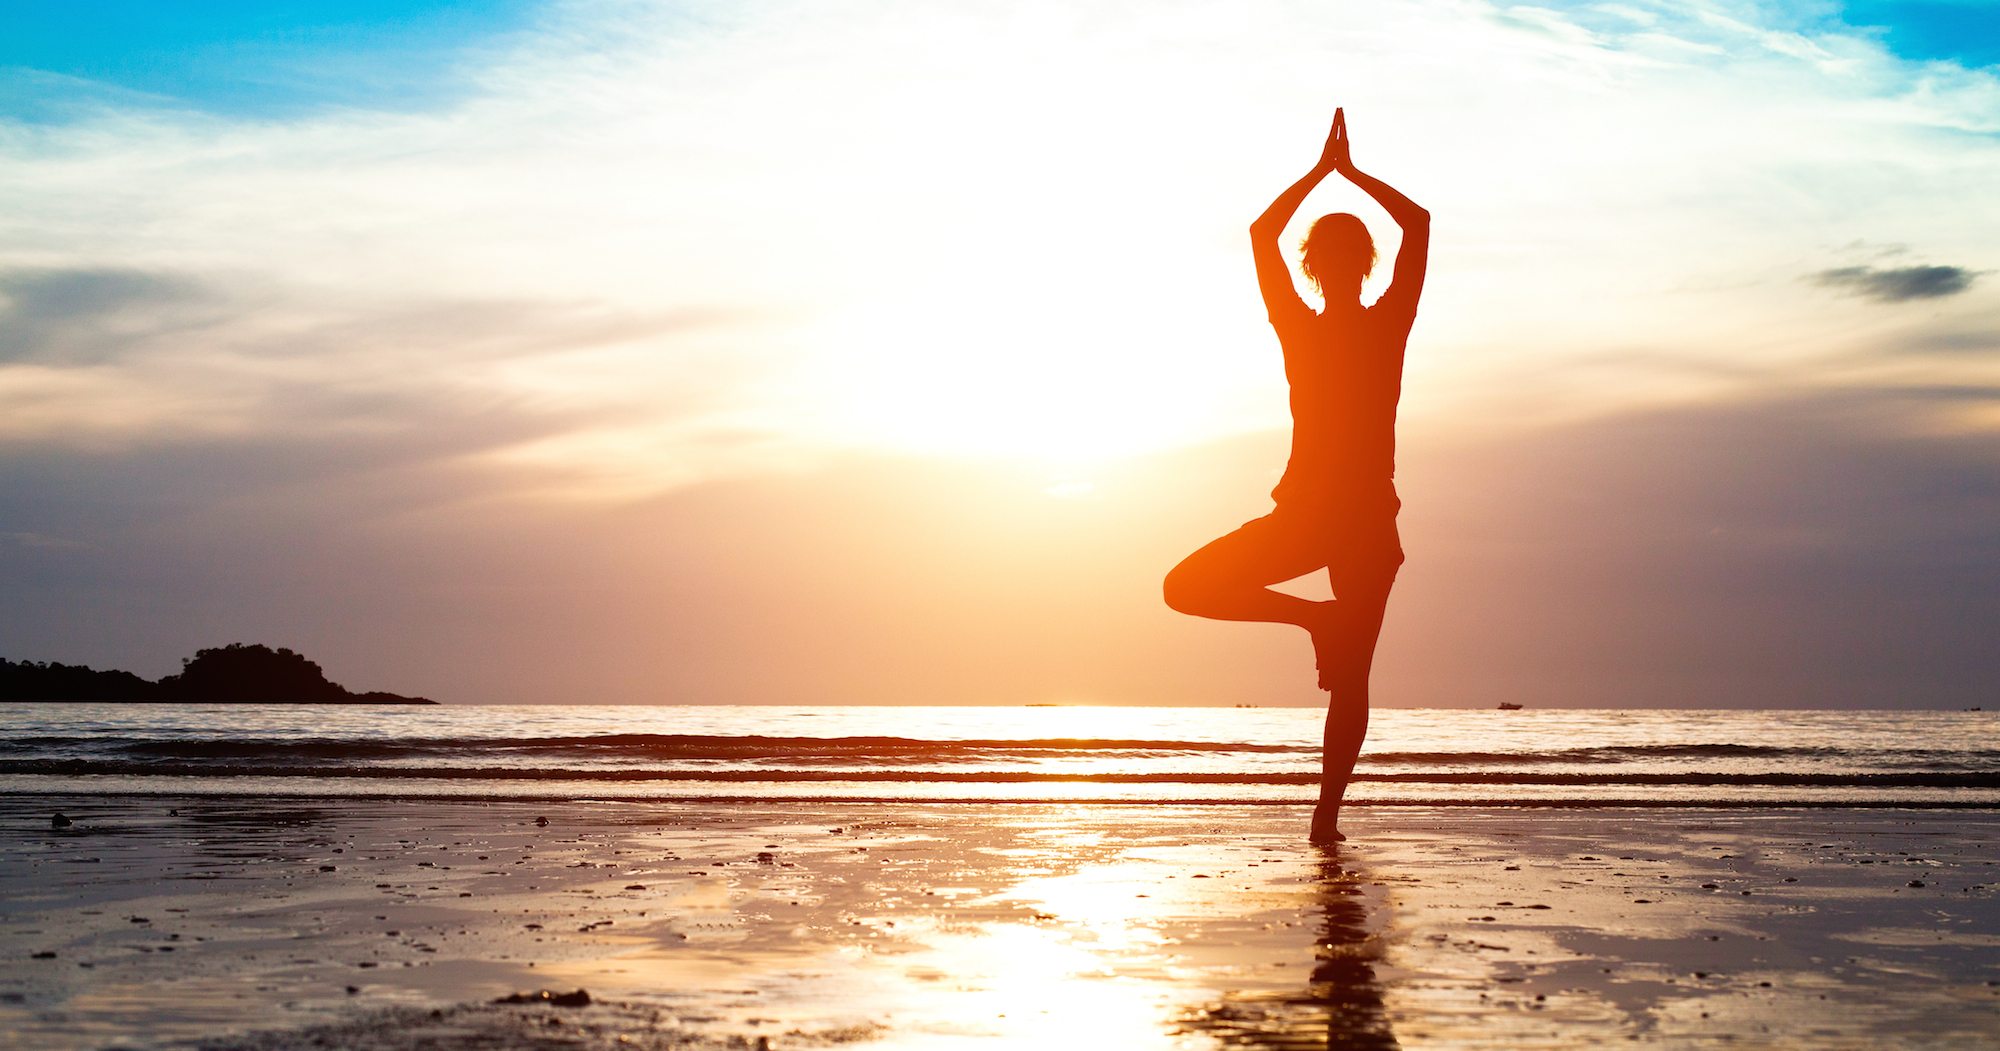 Enjoy a Wellness Weekend at These Yoga Retreats